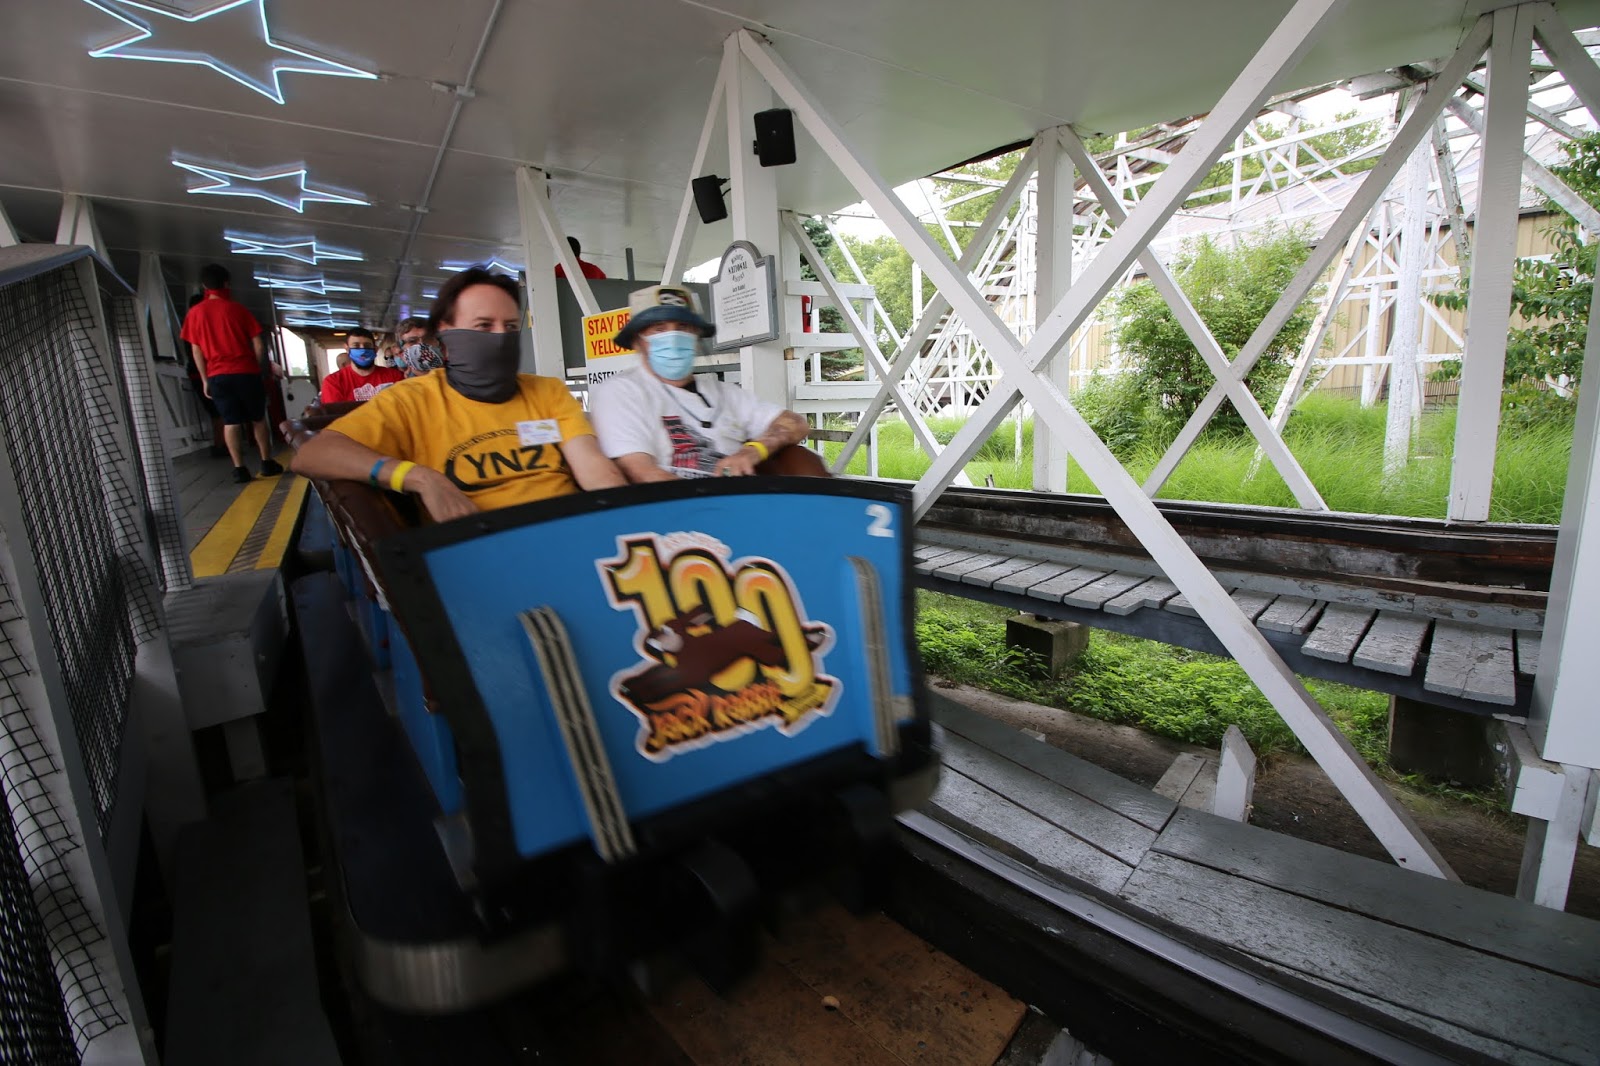 Jack Rabbit Roller Coaster Ride in Pittsburgh